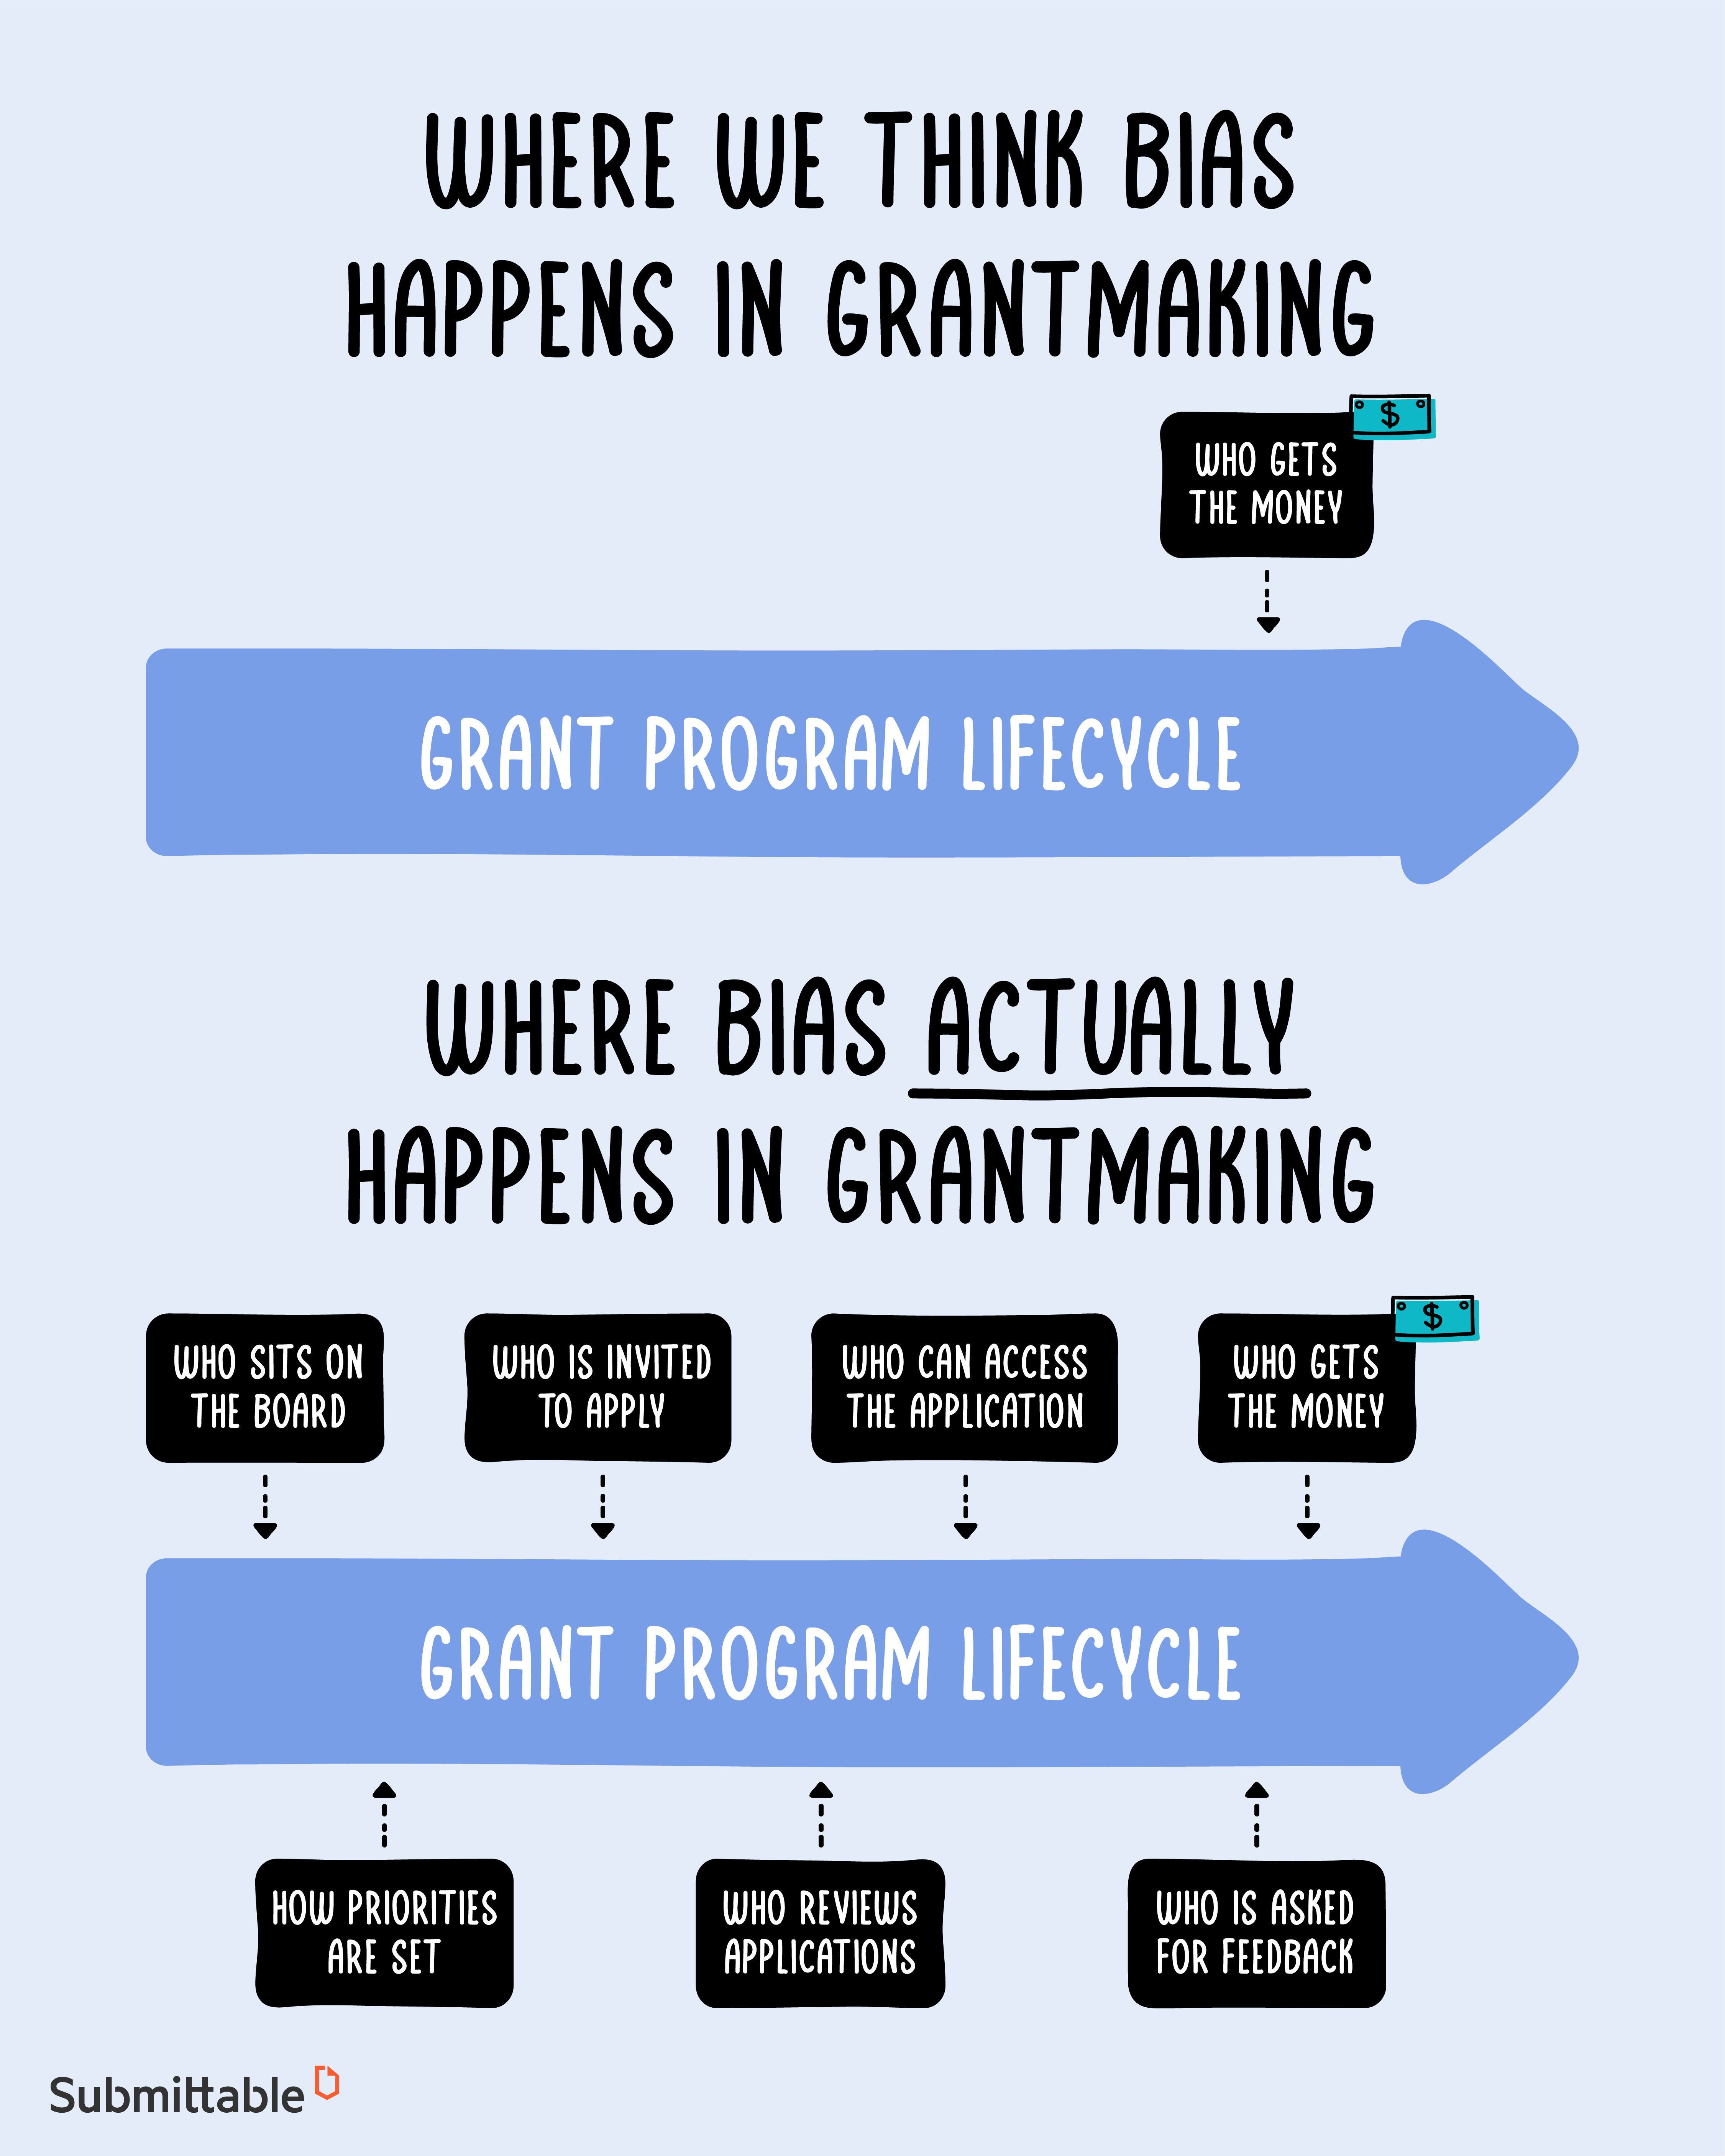 CartooN: Bias in grantmaking